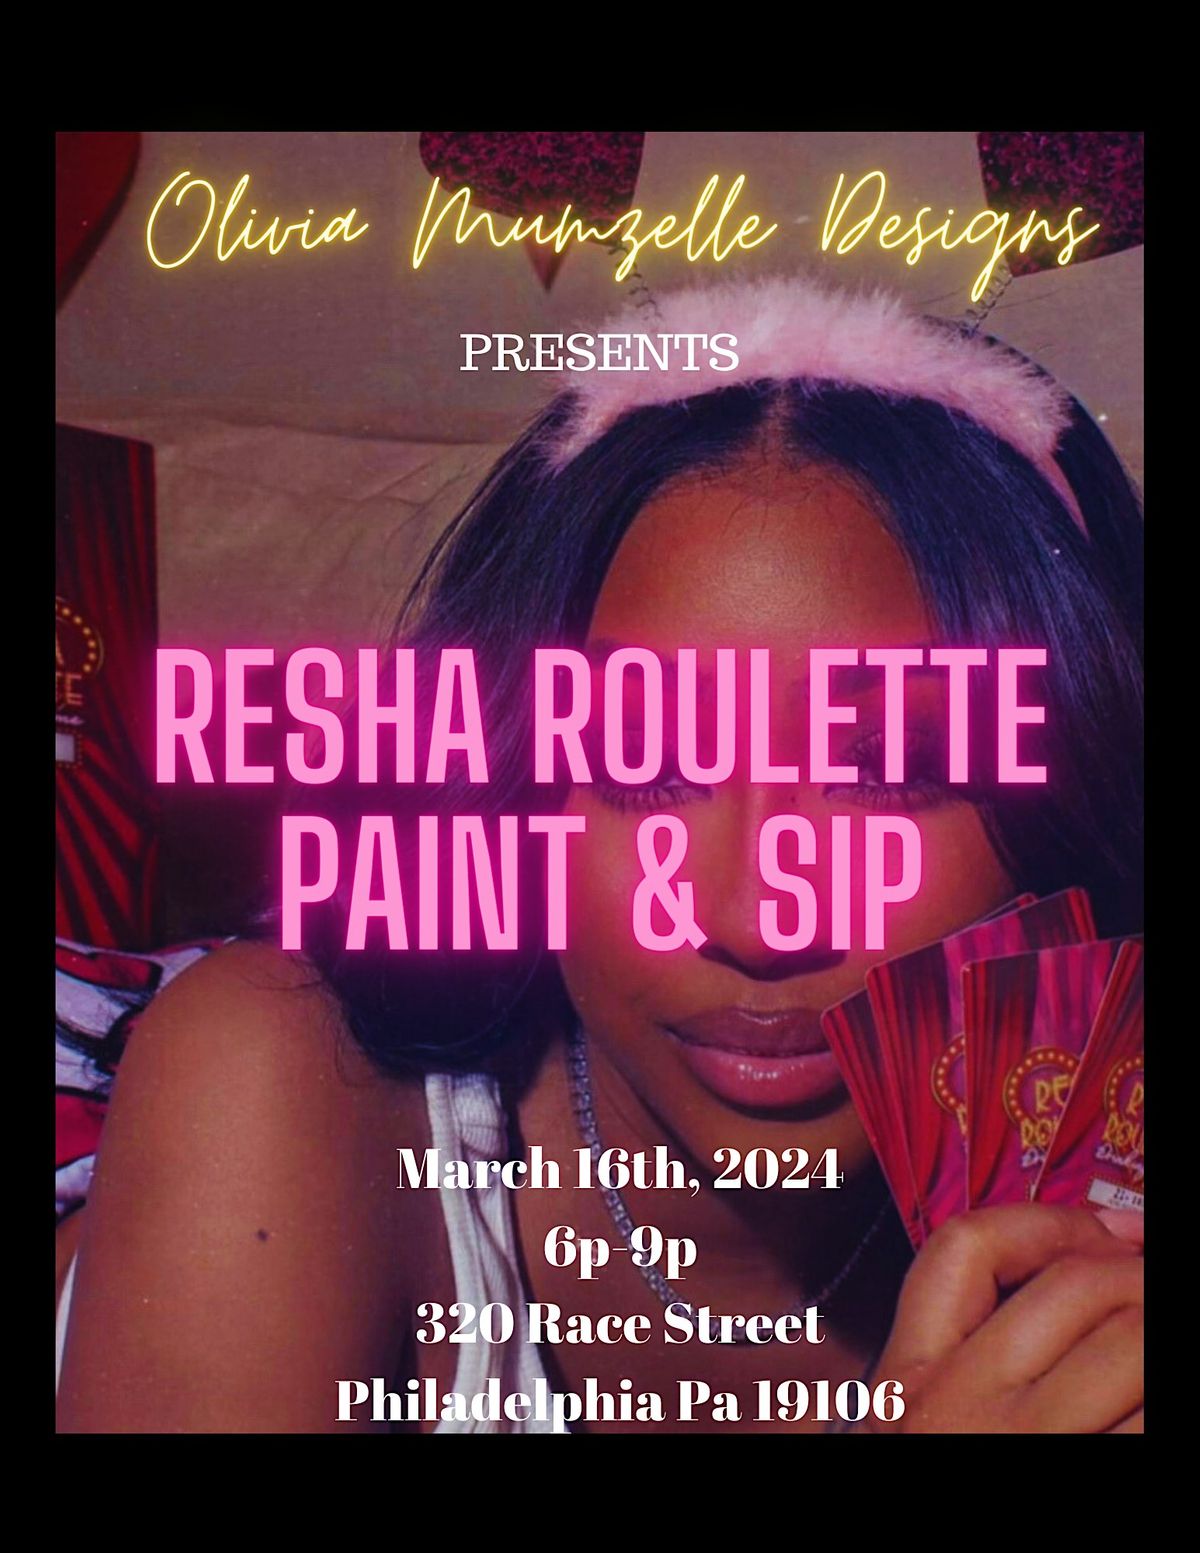 Olivia Mumzelle Designs Presents Resha Roulette Paint & Sip